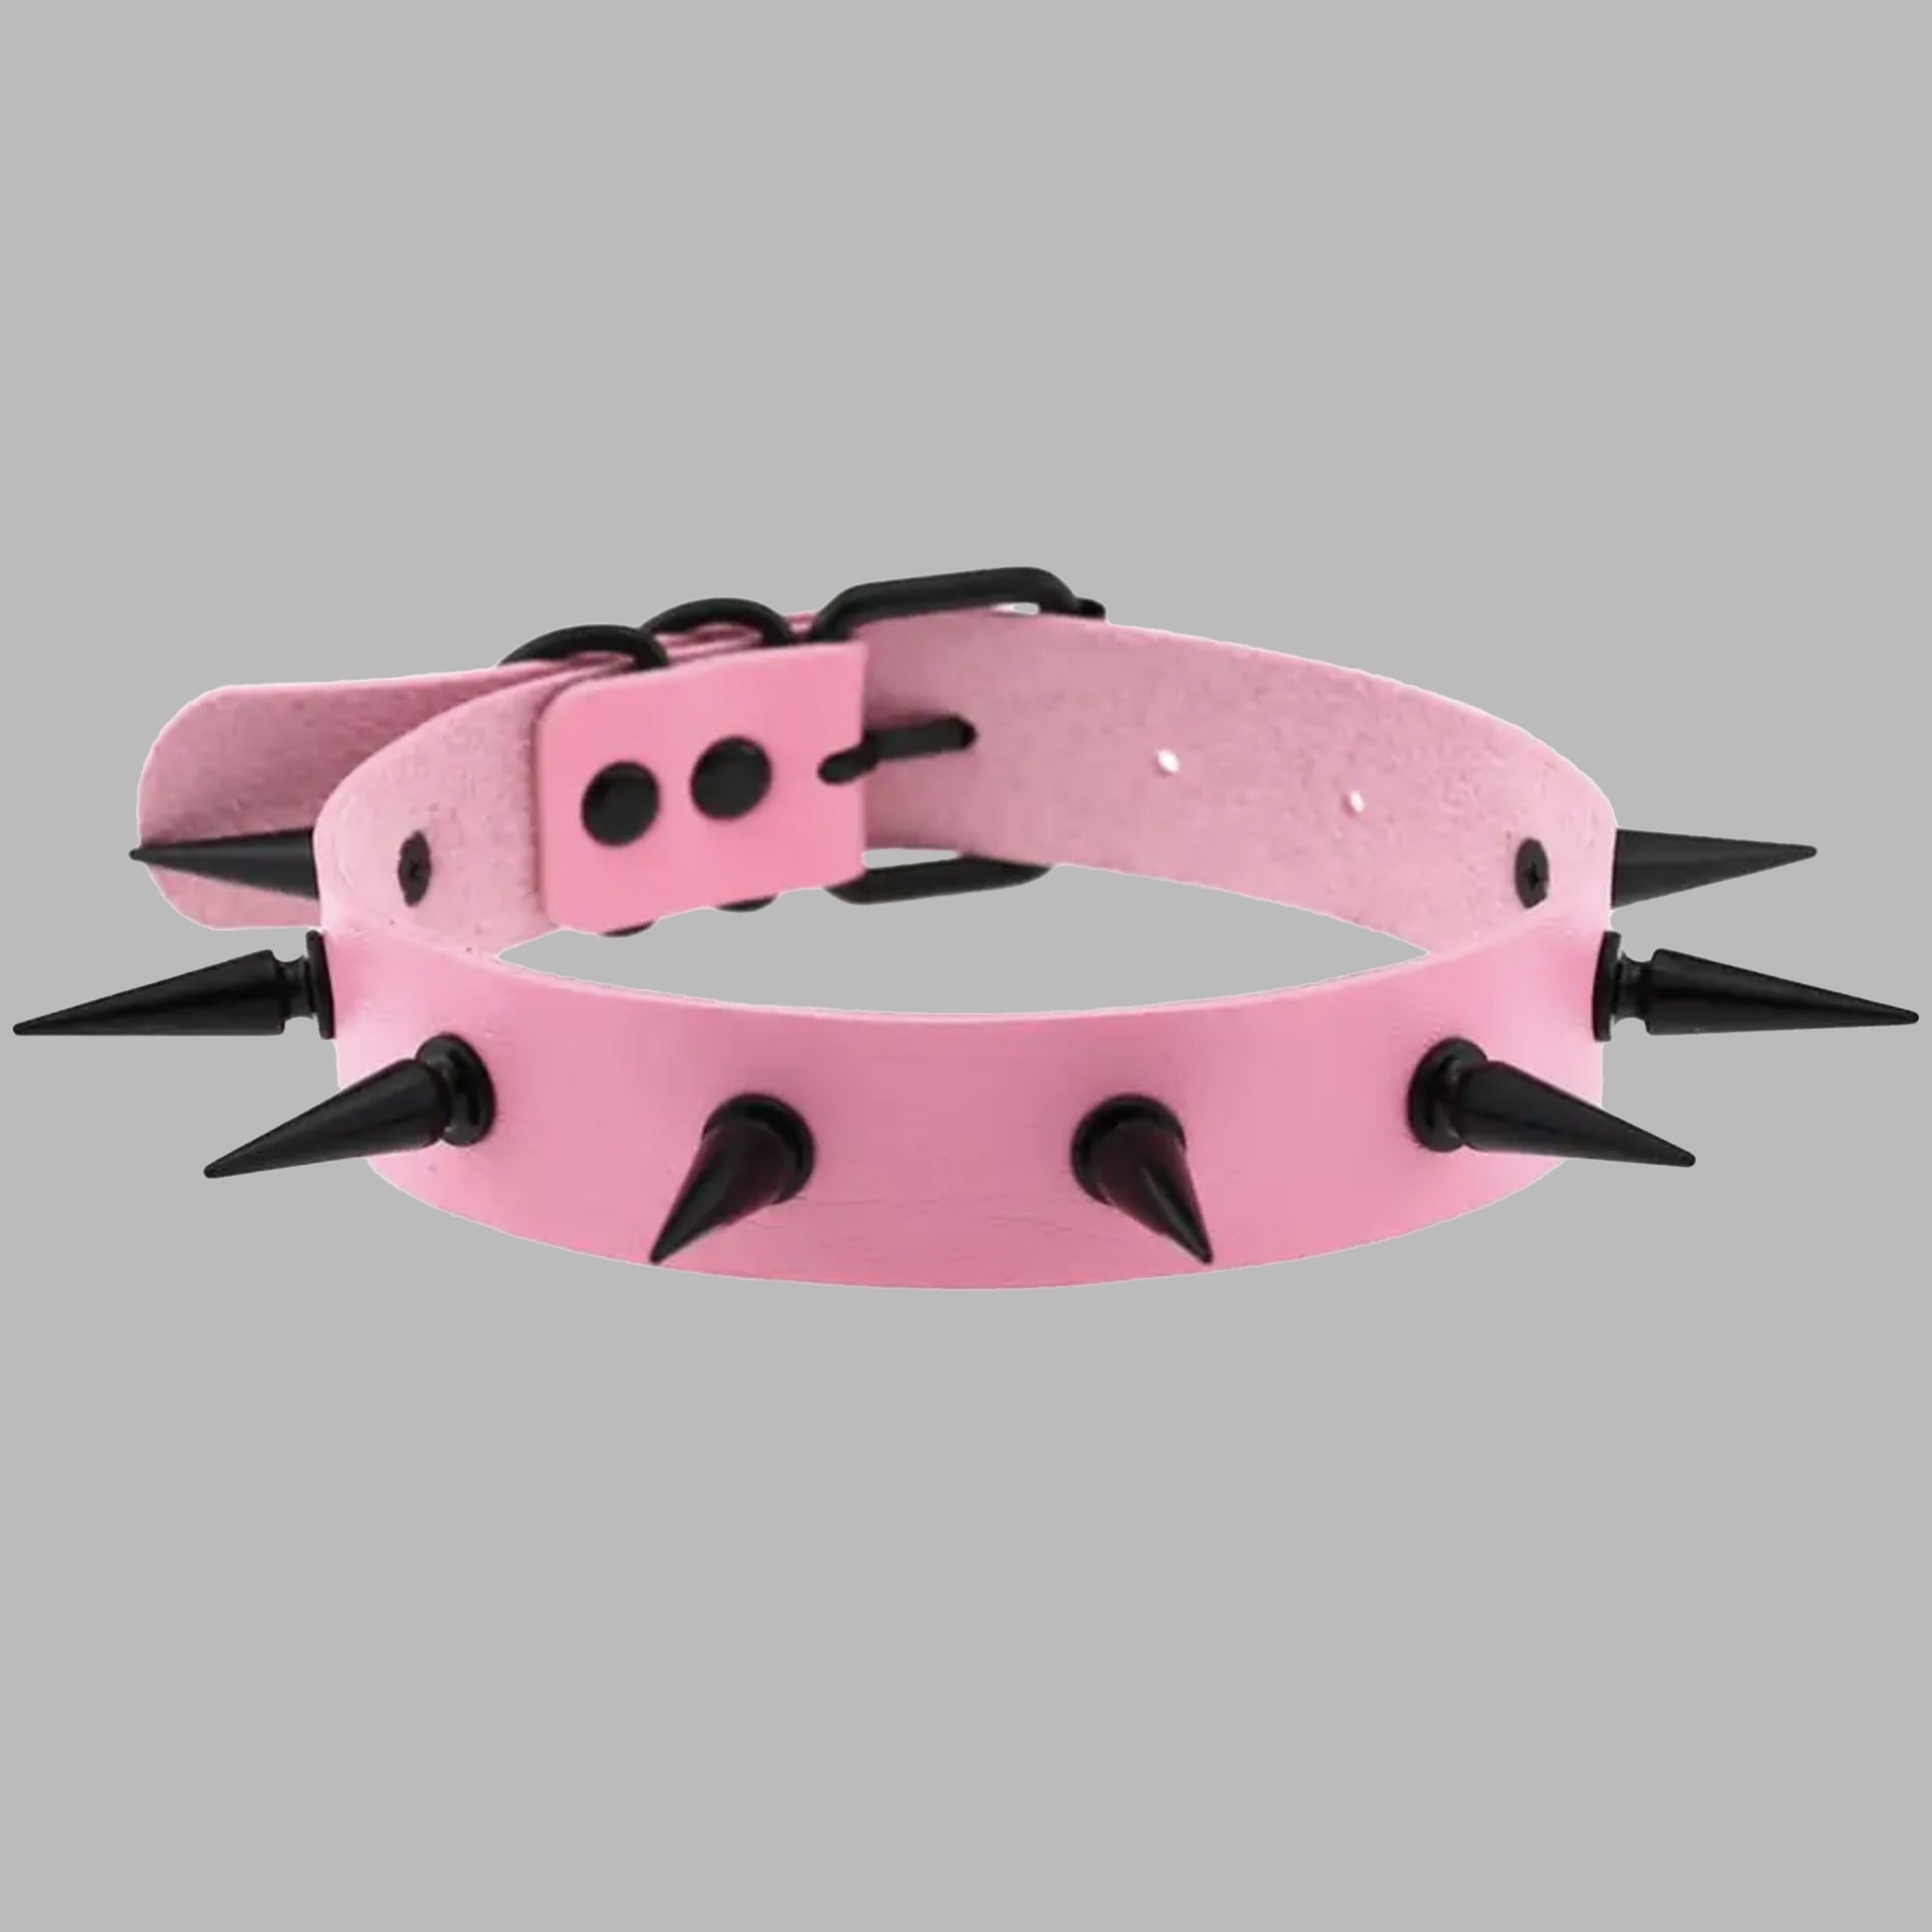 2 Inch Spike Collar - Baby Pink & Black